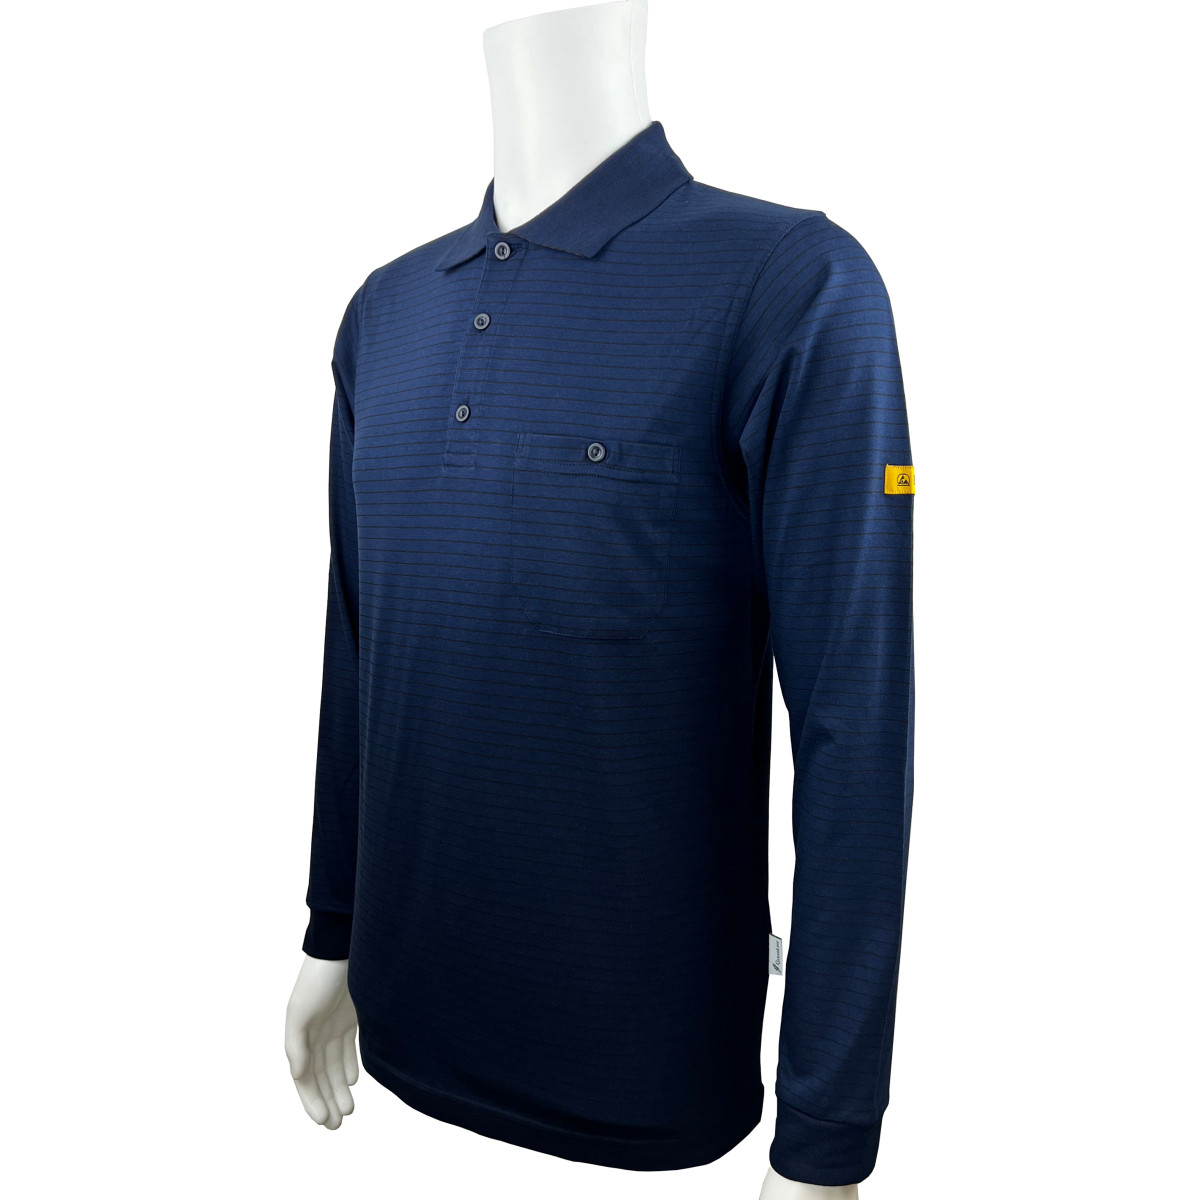 KETEX® ladies' and men's polo shirt long sleeve navy